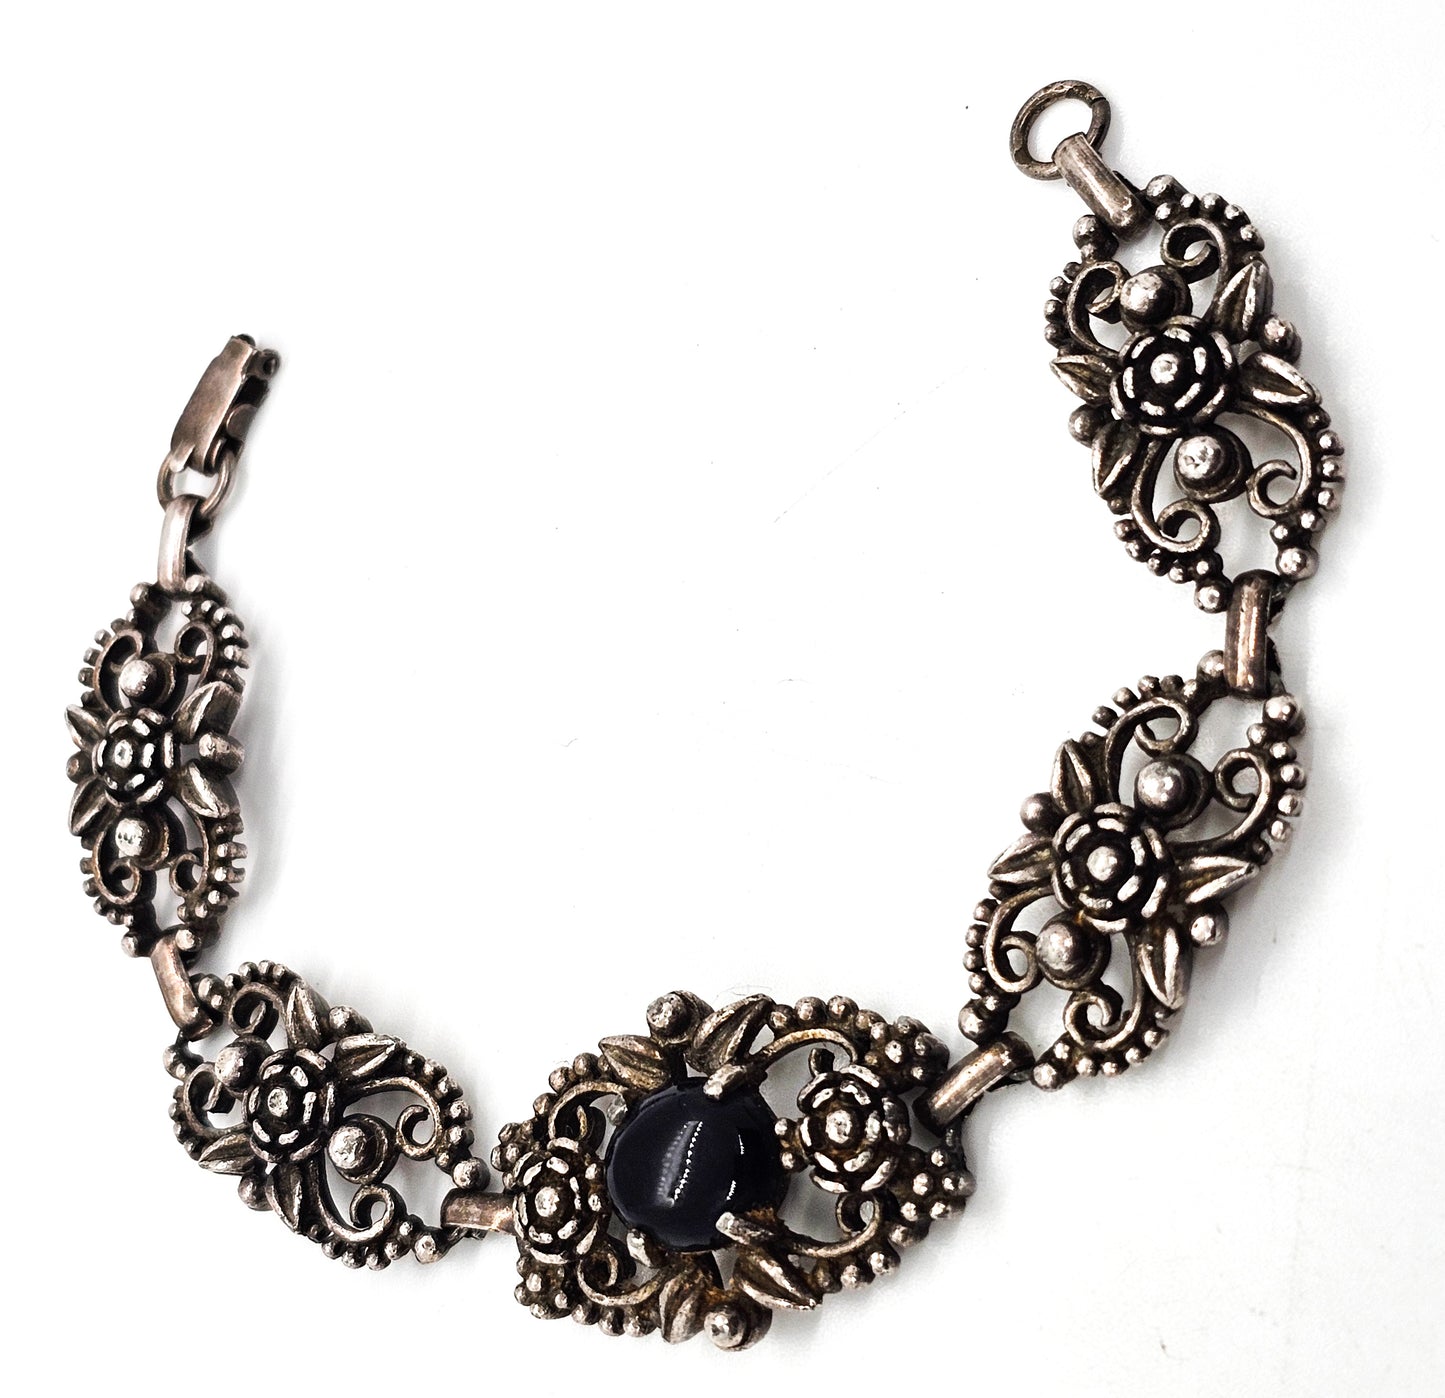 Filigree open work floral vintage panel bracelet with black stone accent